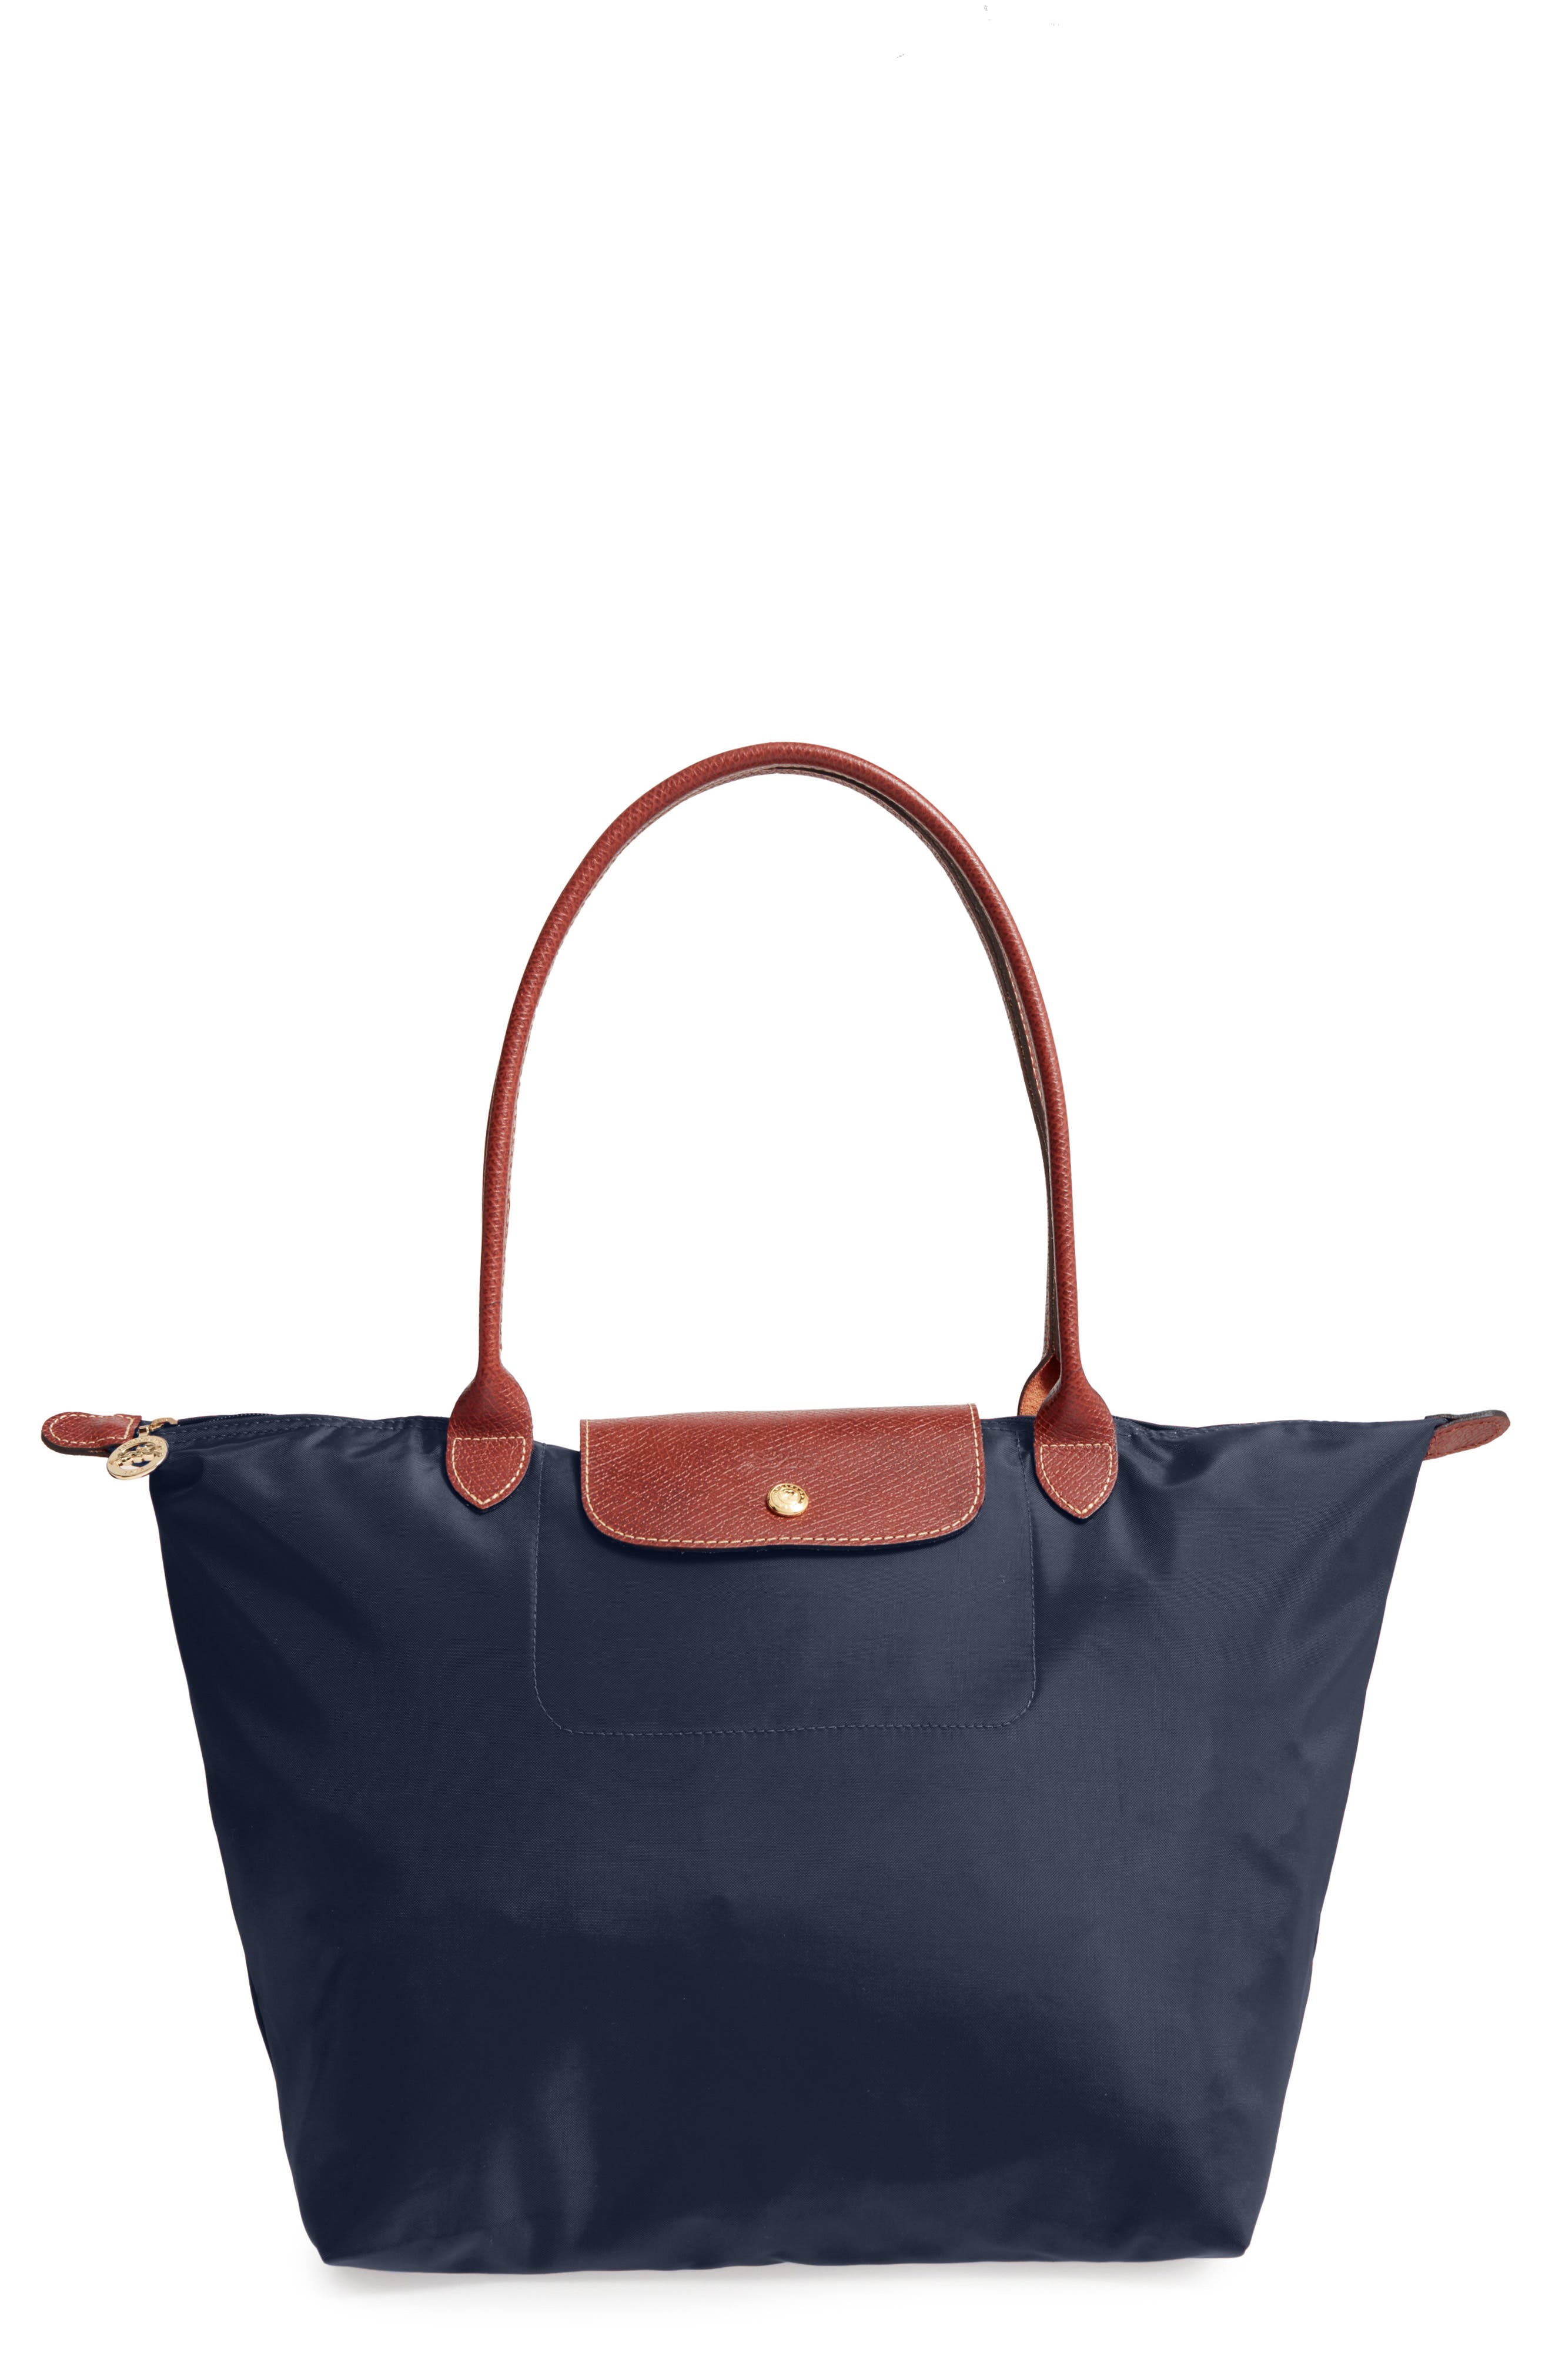 Large Buffalo Leather Tote Bag Women Purse Travel Handbag Shopping Shoulder Bags